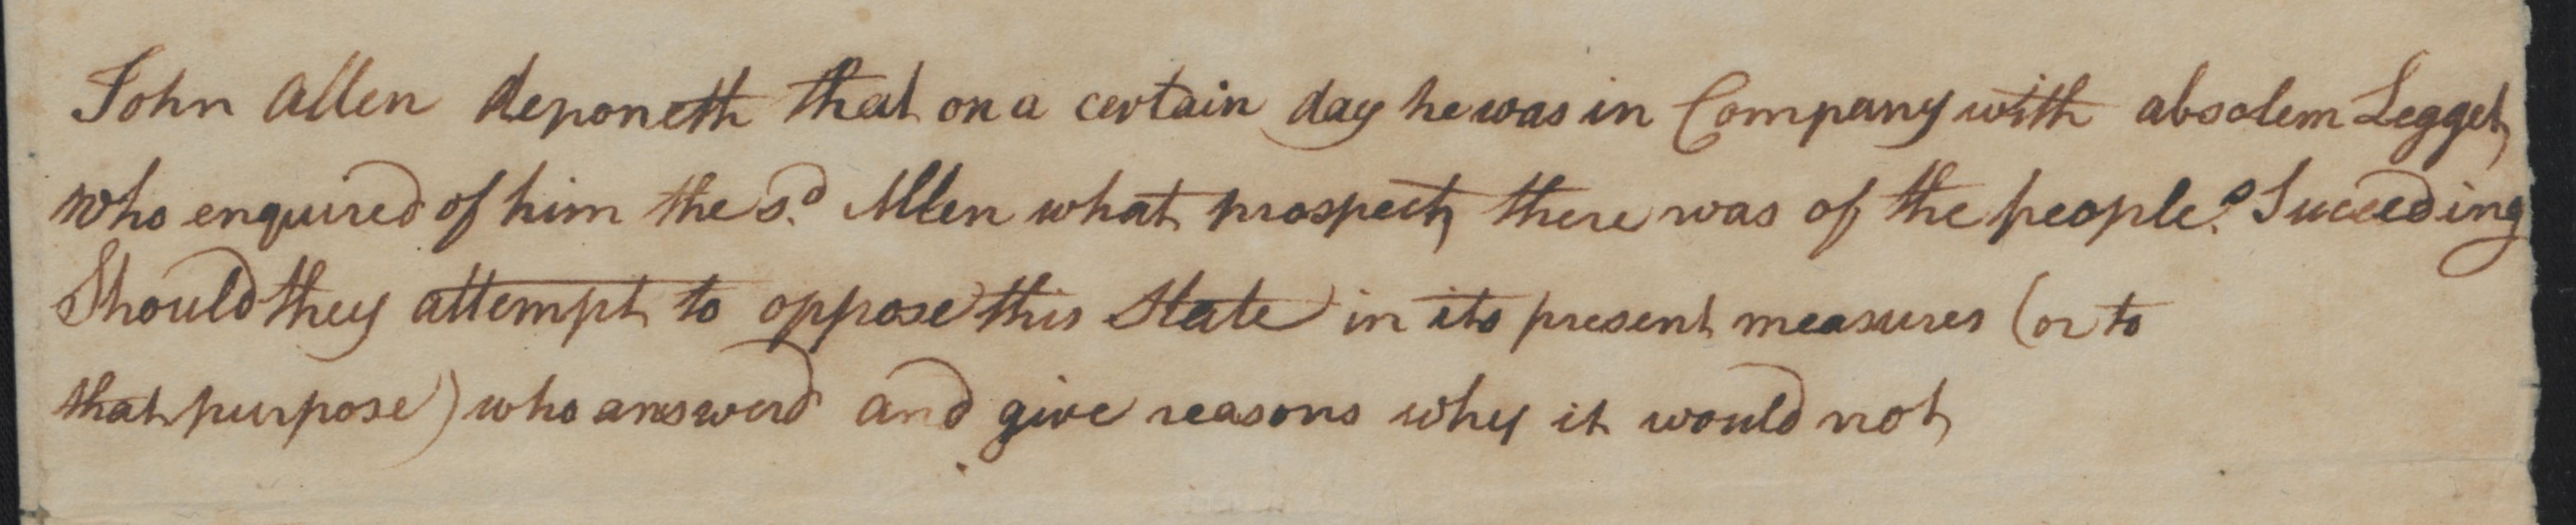 Deposition of John Allen, c1 July 1777